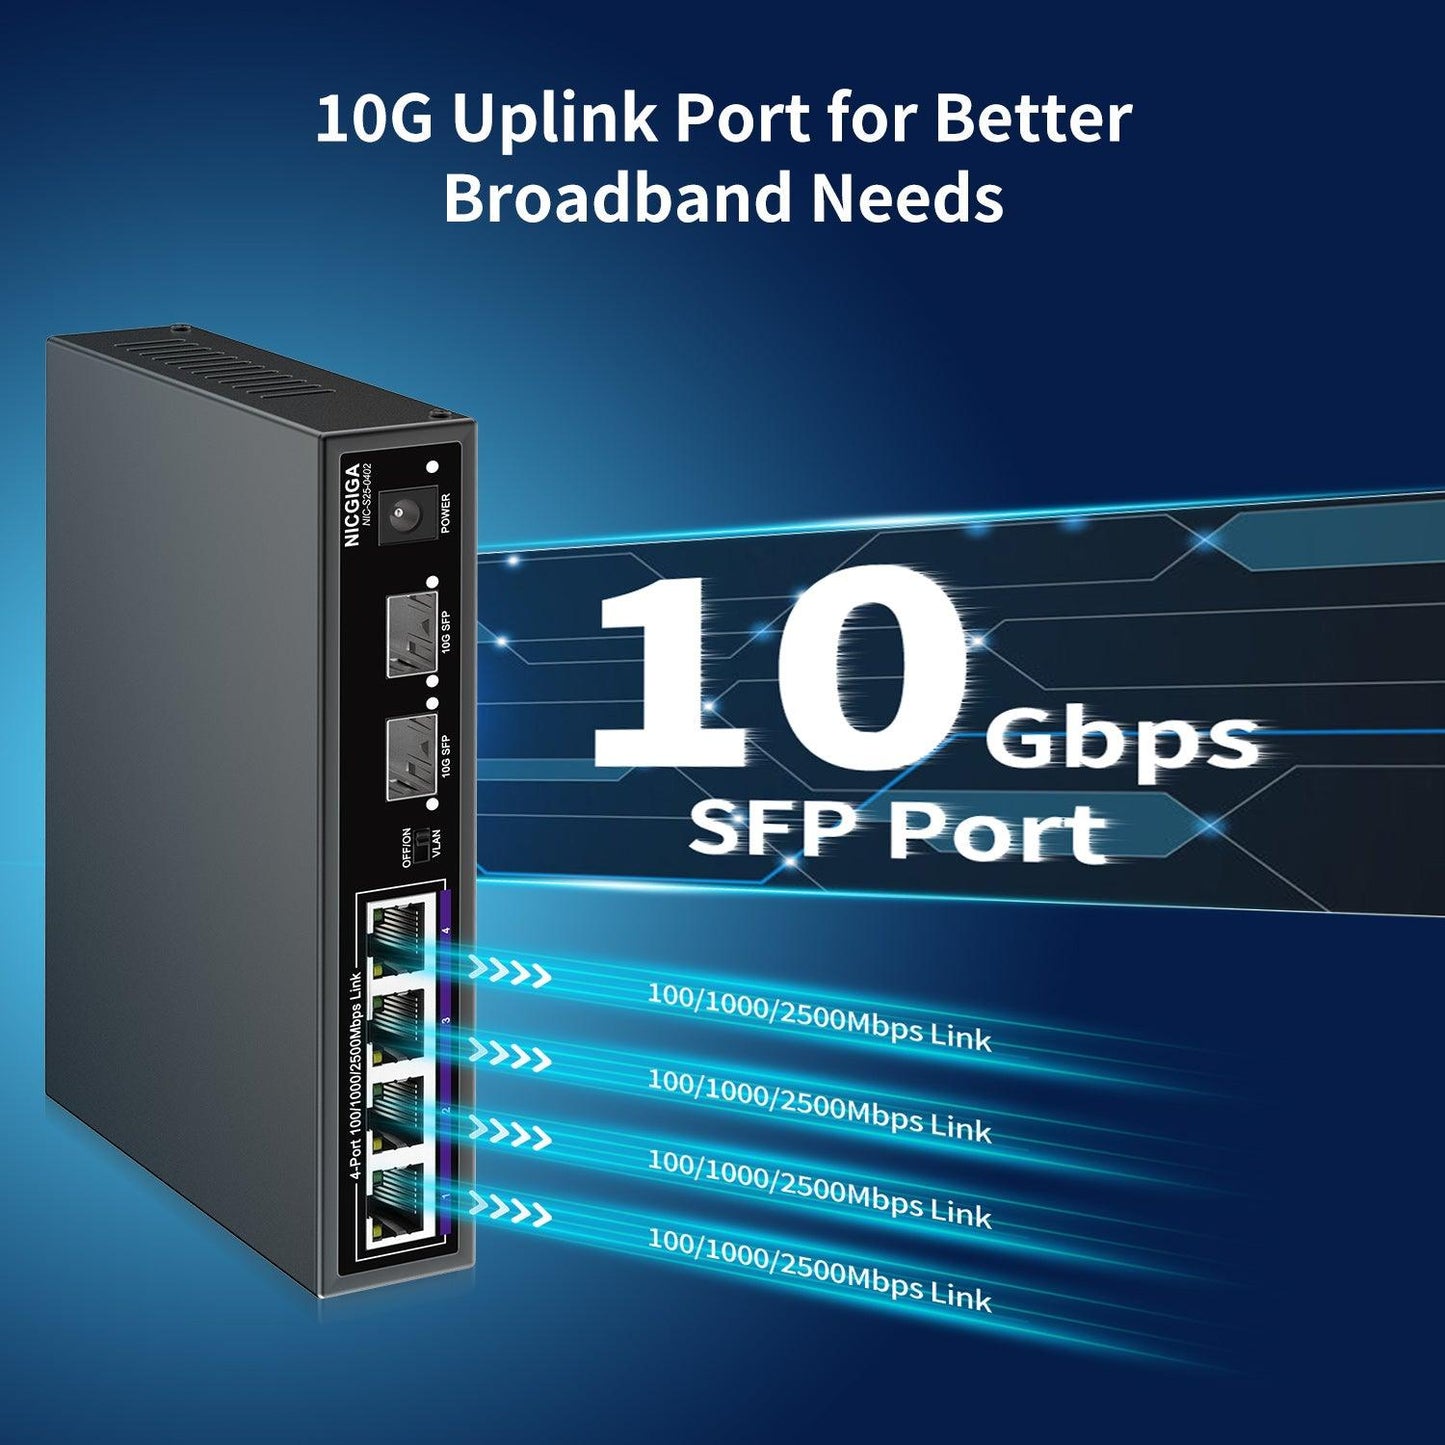 NICGIGA 6 Port 2.5G Ethernet Switch with 4X 2500Mbps + 2X 10G SFP Upli